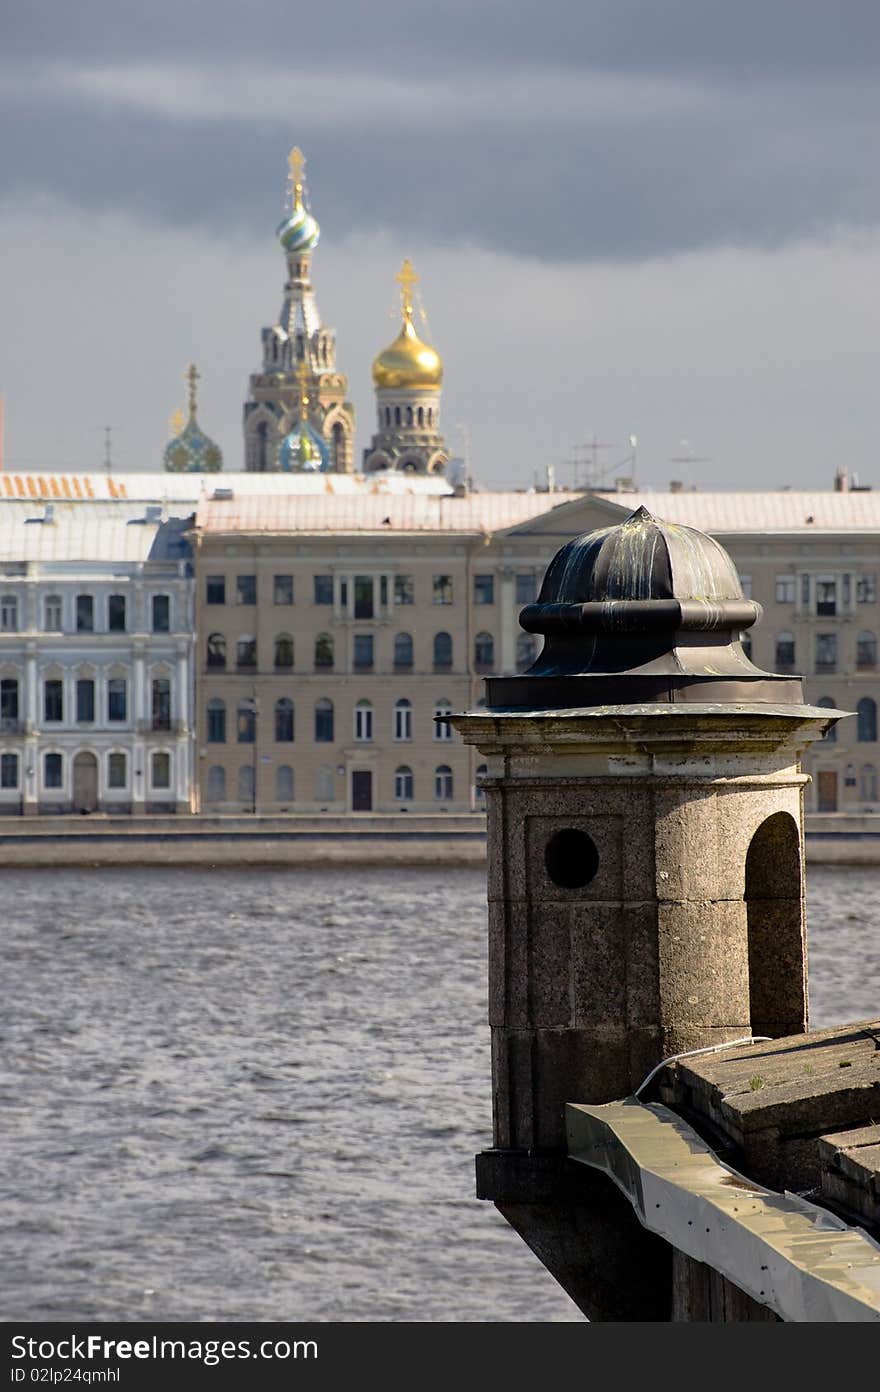 The view of Sankt Petersburg Russia